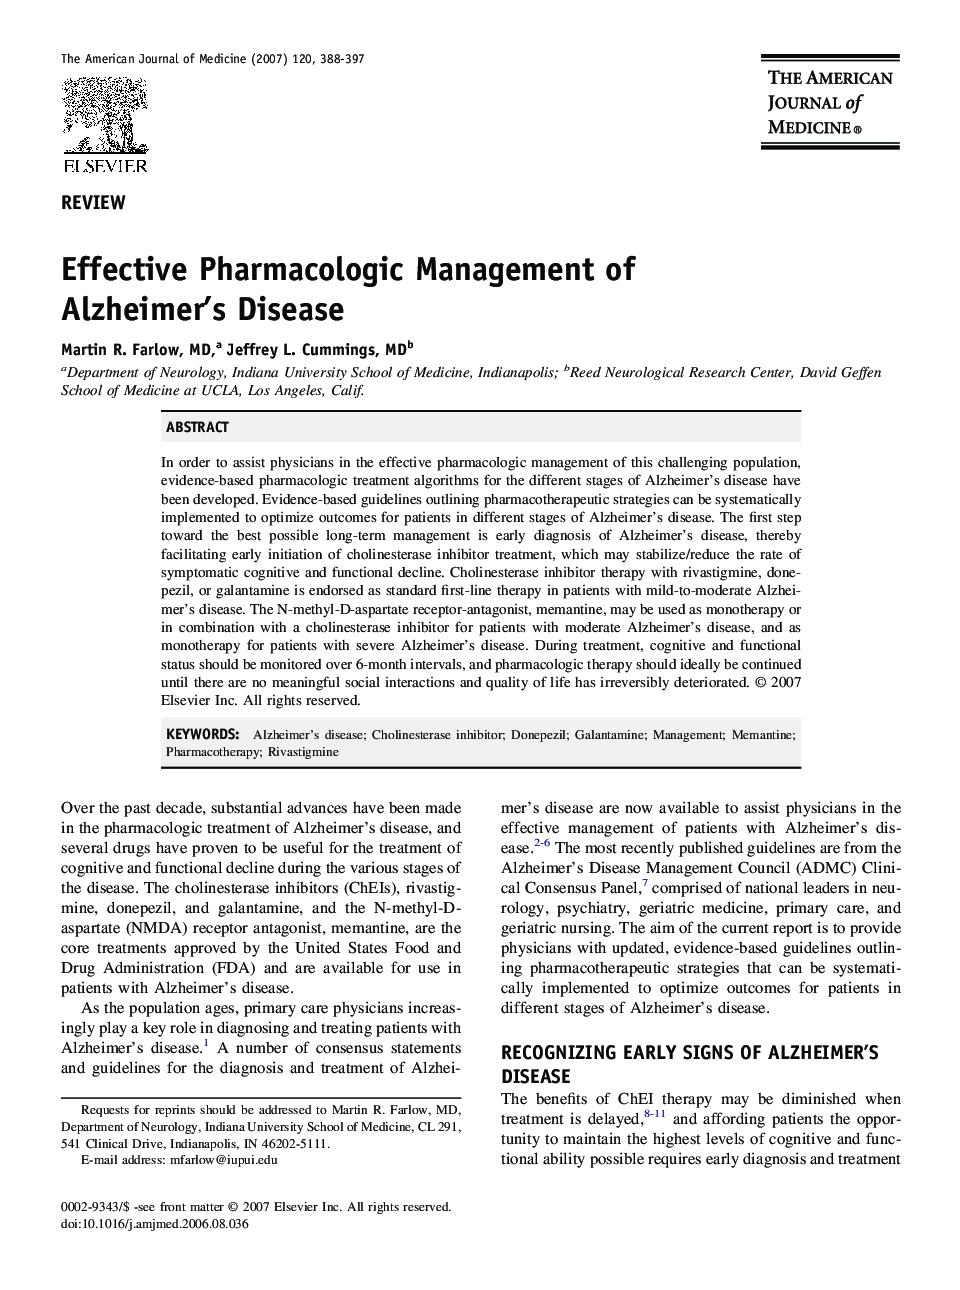 Effective Pharmacologic Management of Alzheimer’s Disease